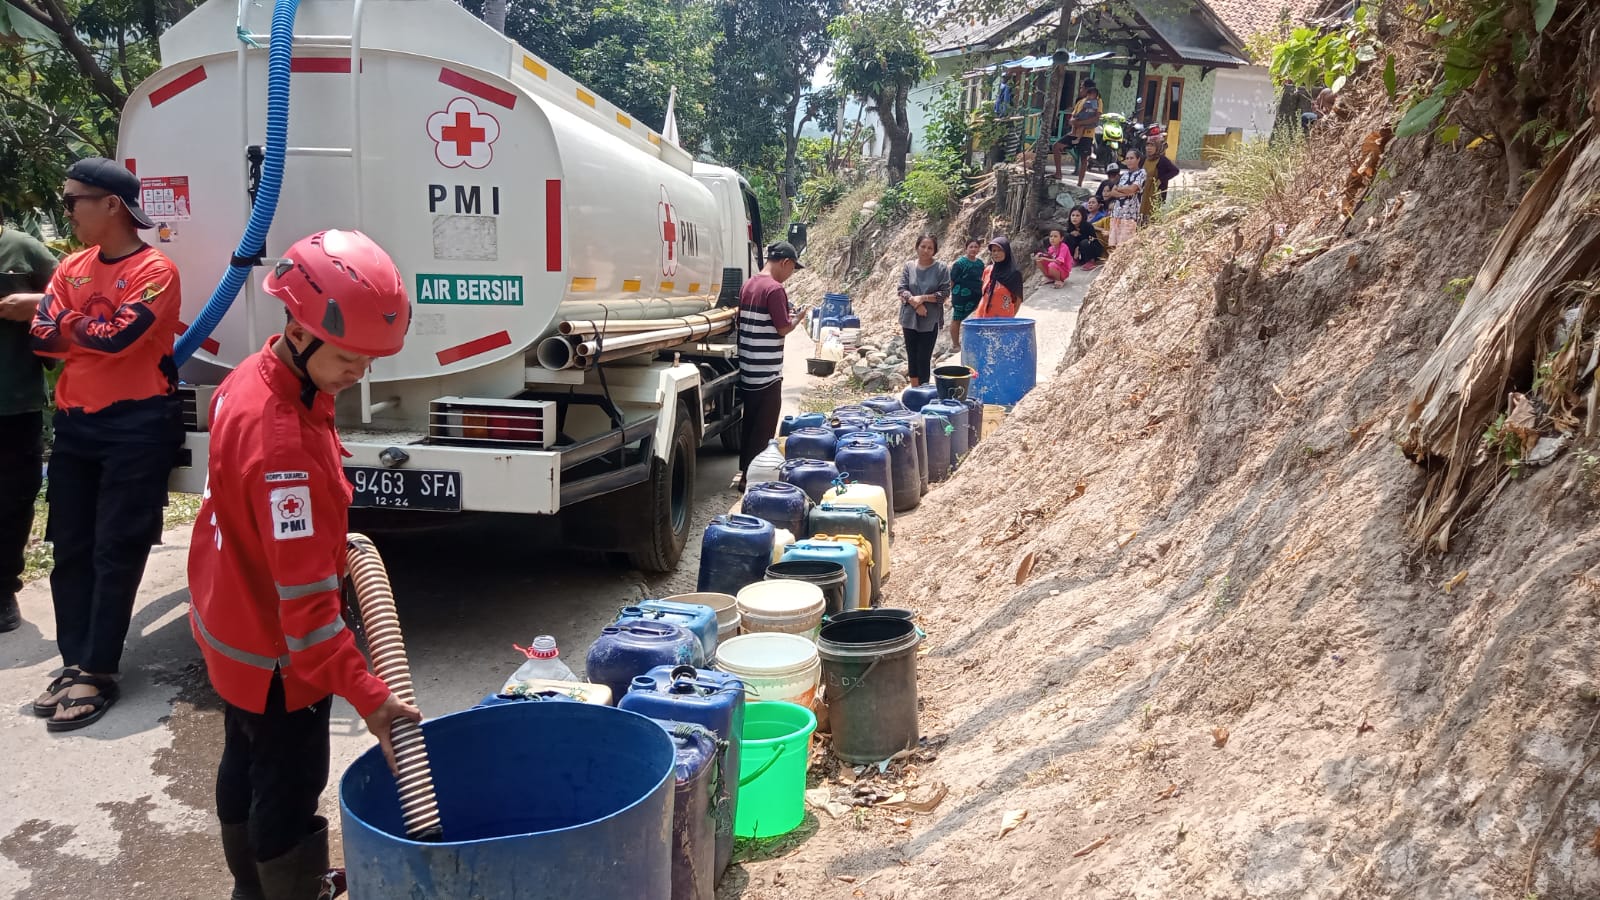 PMI Kabupaten Sukabumi Distribusikan Air Bersih di 2 Kampung di Desa Cikahuripan, Kecamatan Cisolok, Kabupaten Sukabumi (Sumber : PMI Kabupaten Sukabumi)